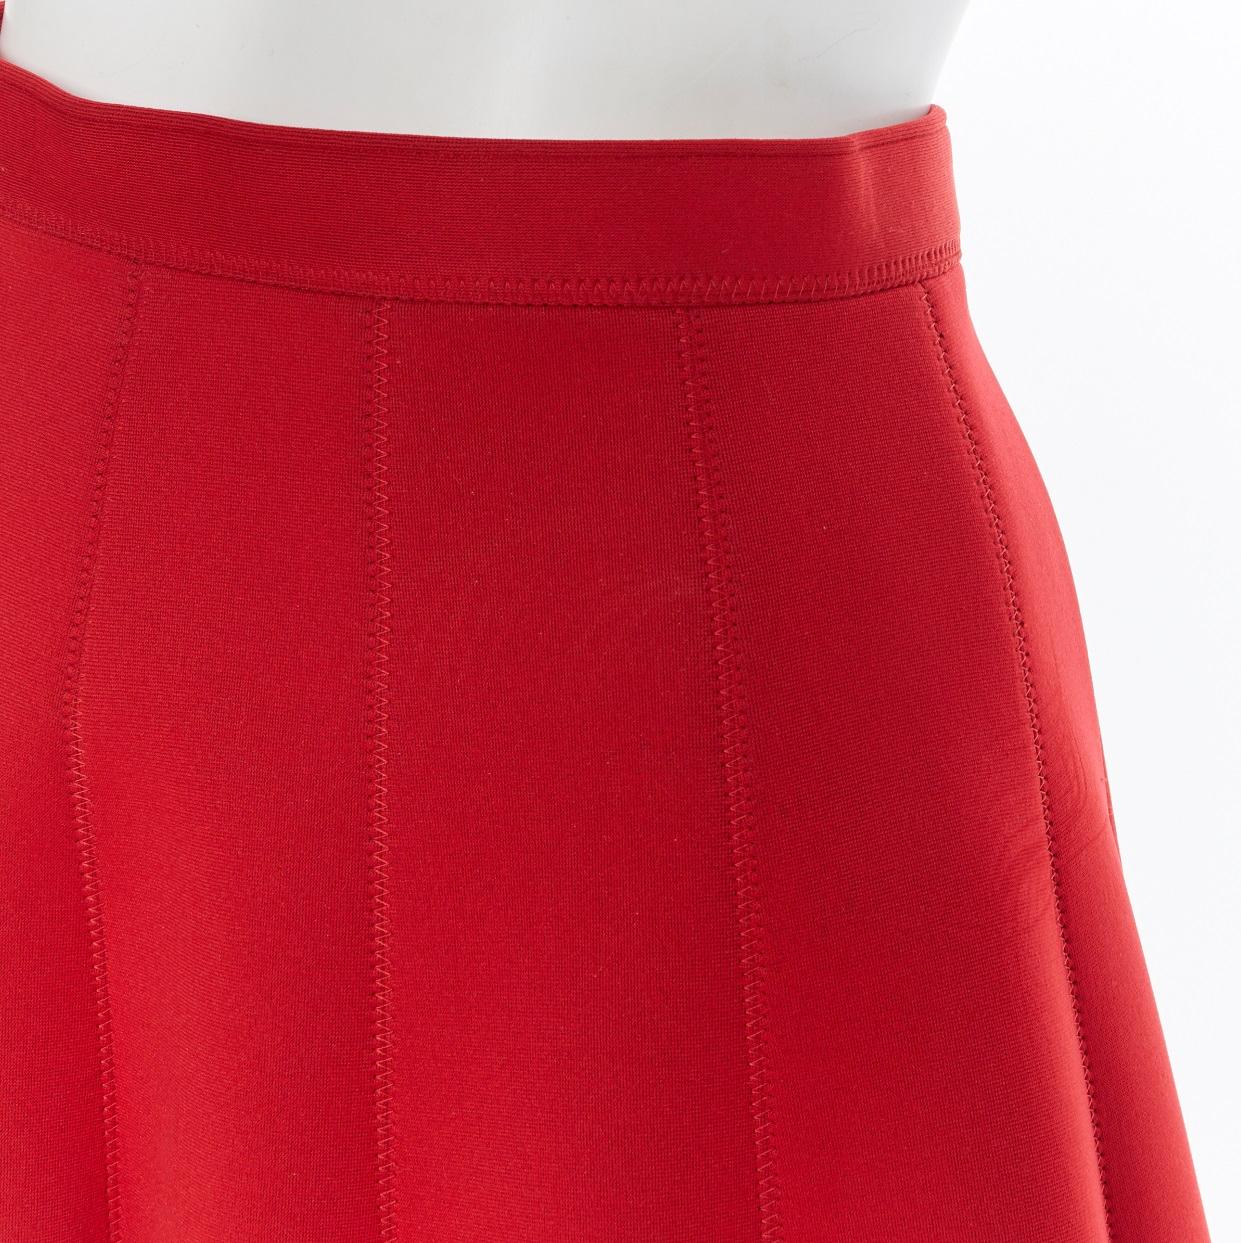 JUNYA WATANABE 2016 red scuba wool structured paneled flared knee skirt S
Brand: Junya Watanabe
Designer: Junya Watanabe
Model Name / Style: Flared skirt
Material: Nylon
Color: Red
Pattern: Solid
Closure: Zip
Extra Detail: Zip nack closure.
Made in: